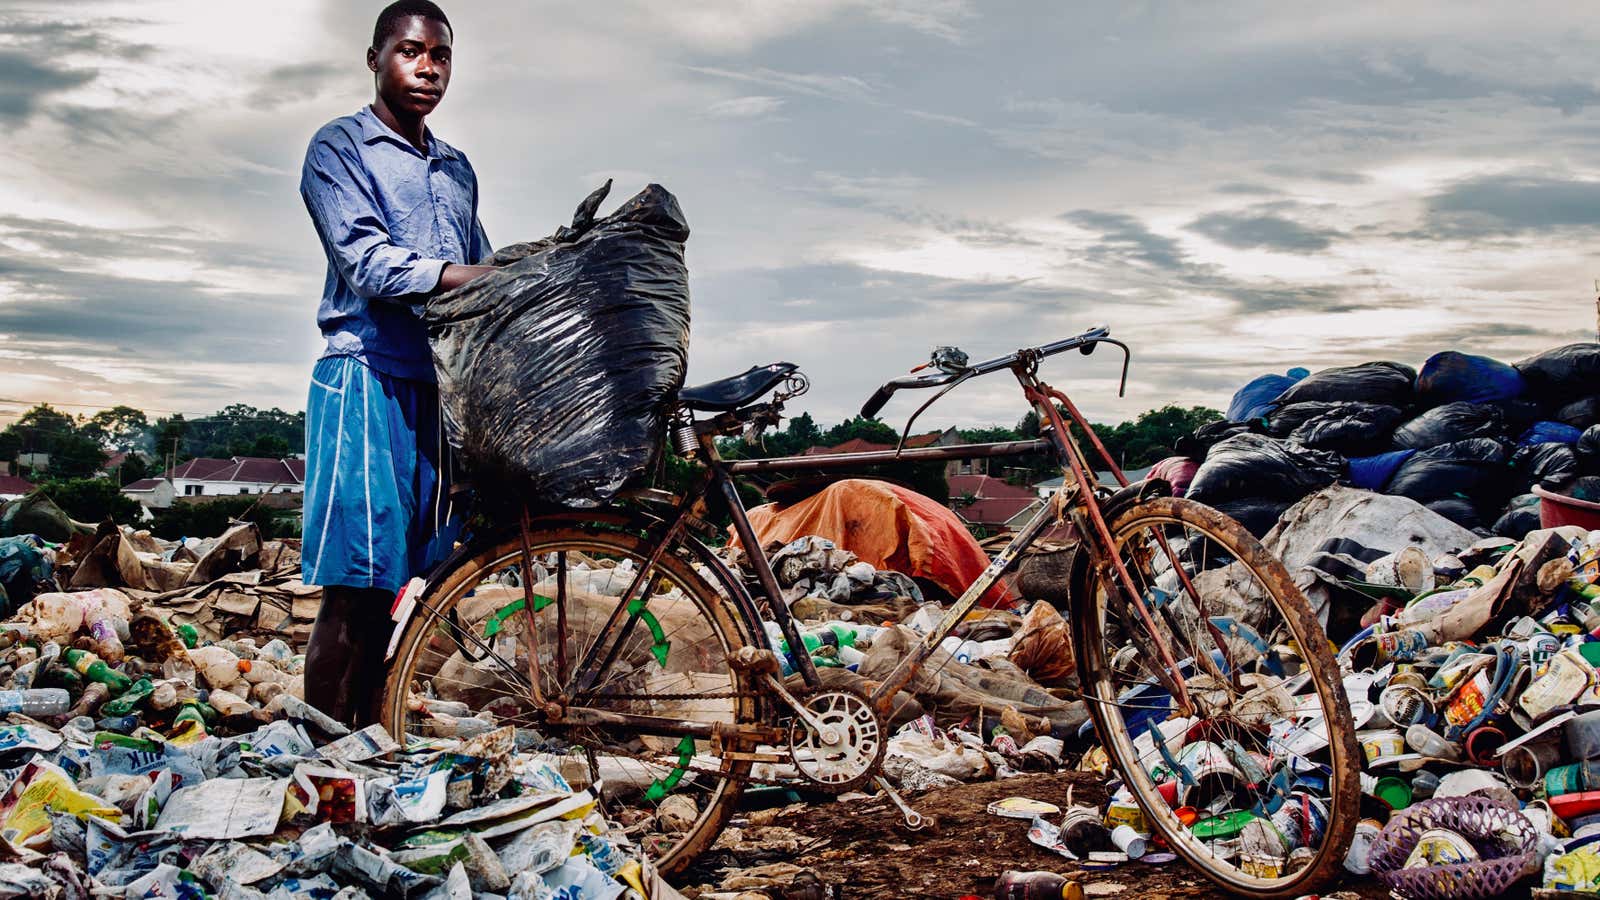 Taking out the trash in Uganda.